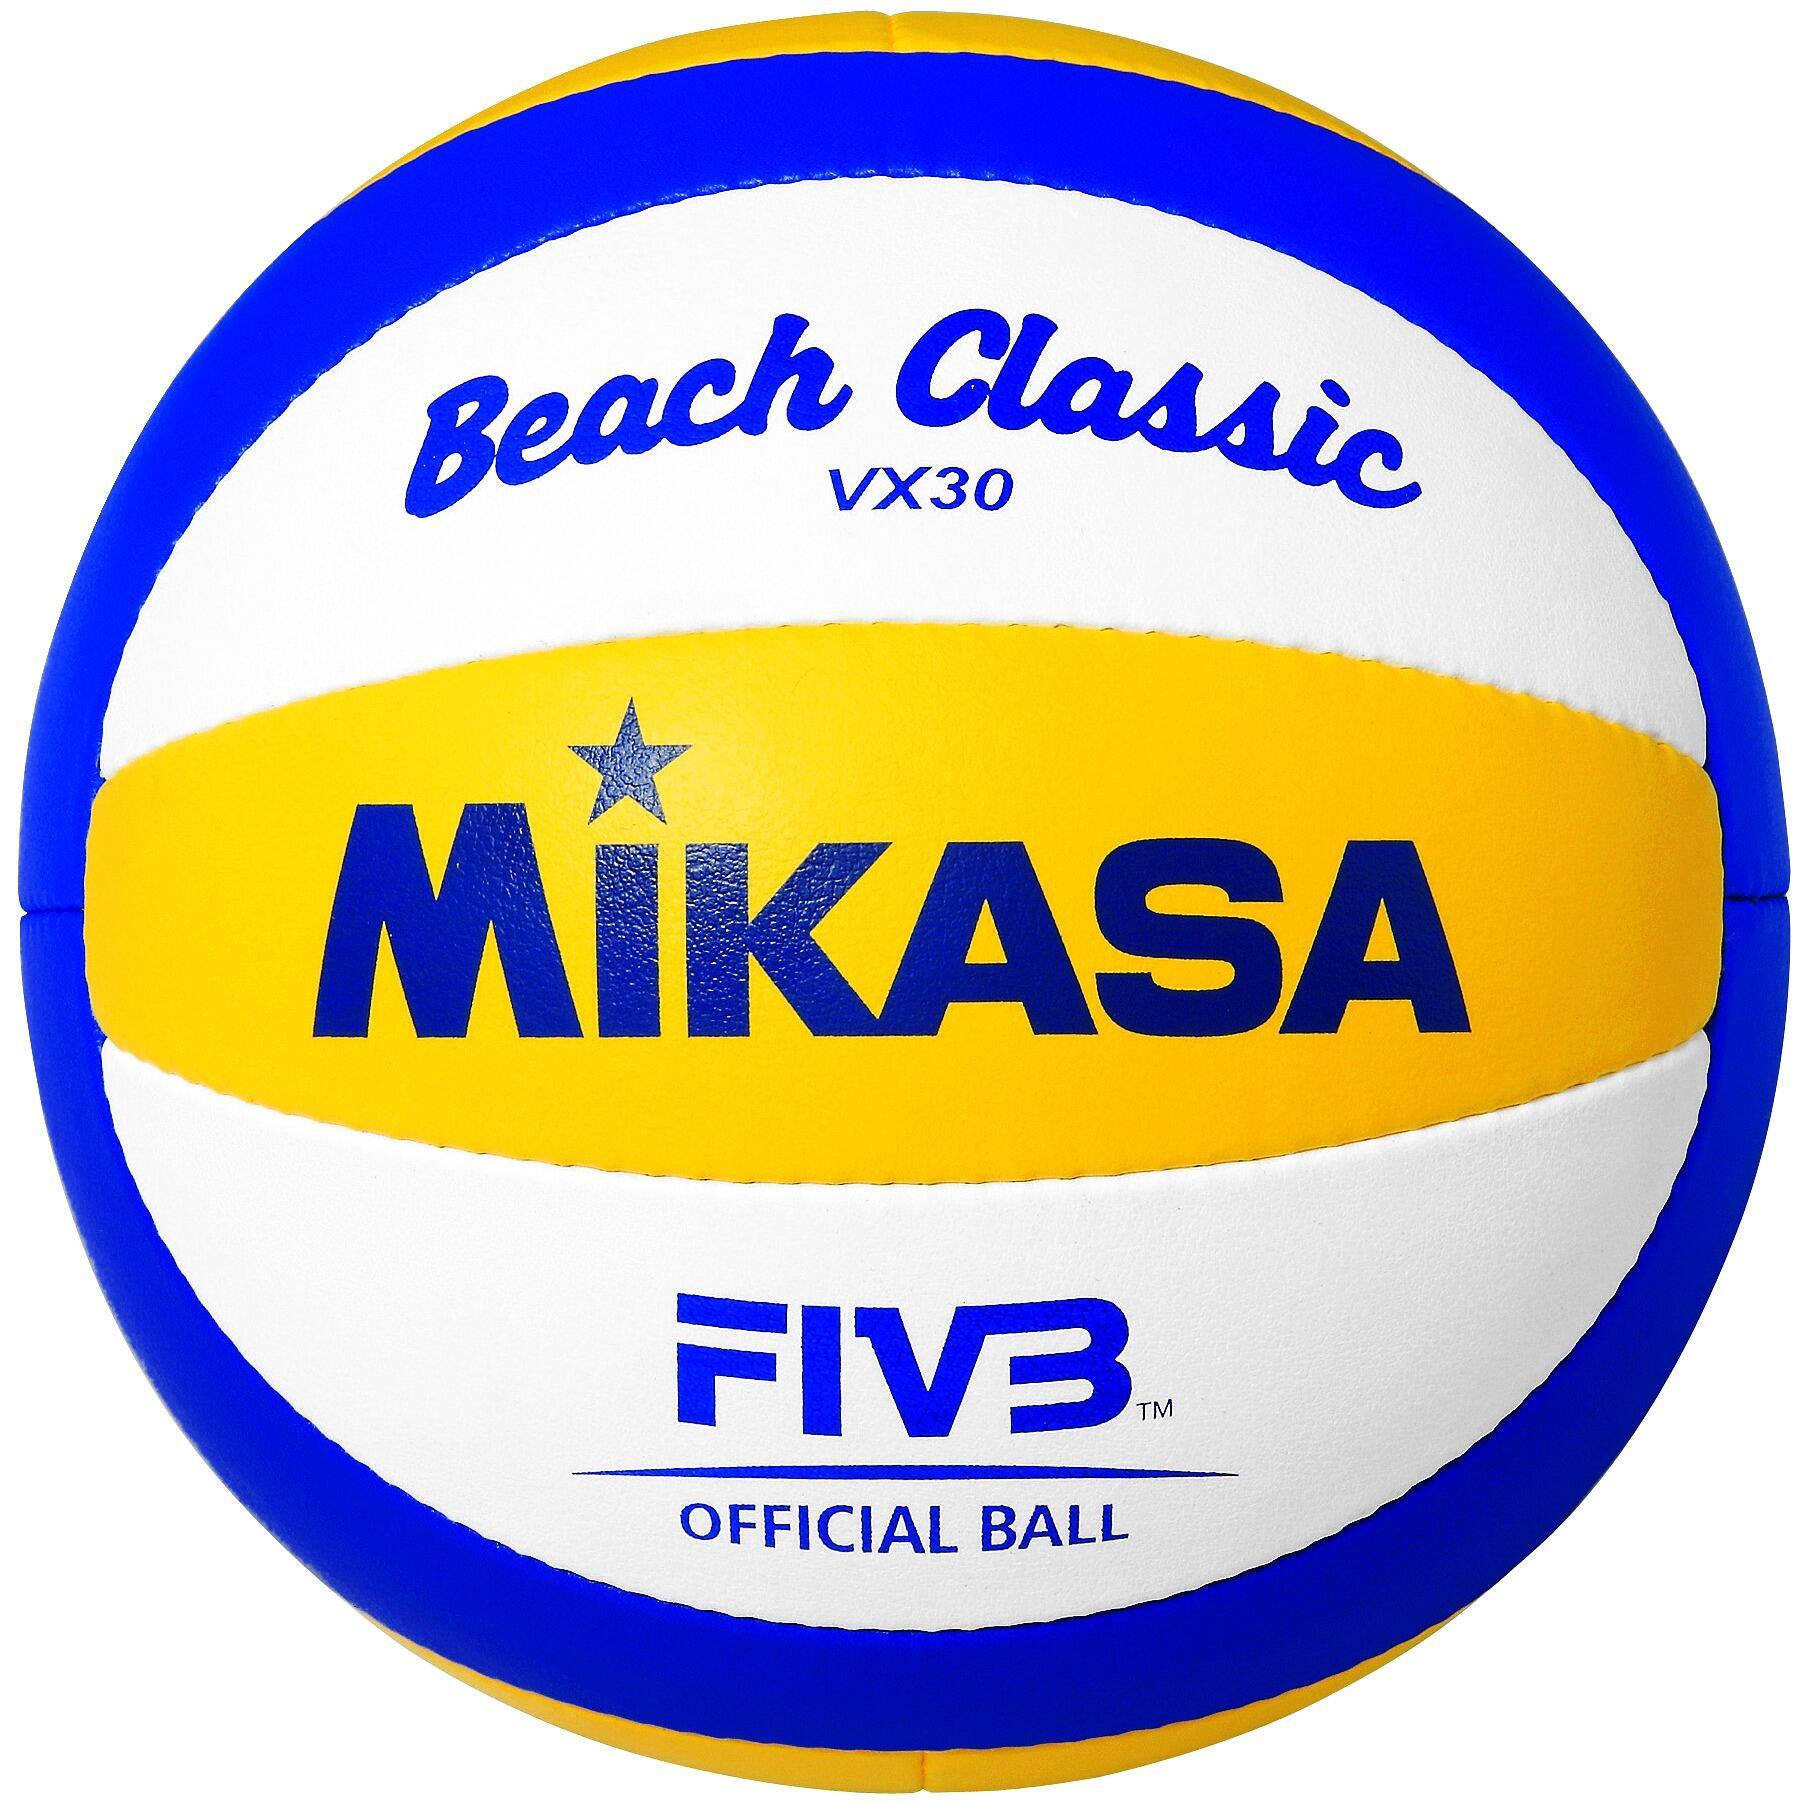 Mikasa Beach Volleyball Beach Classic VX30, красочный